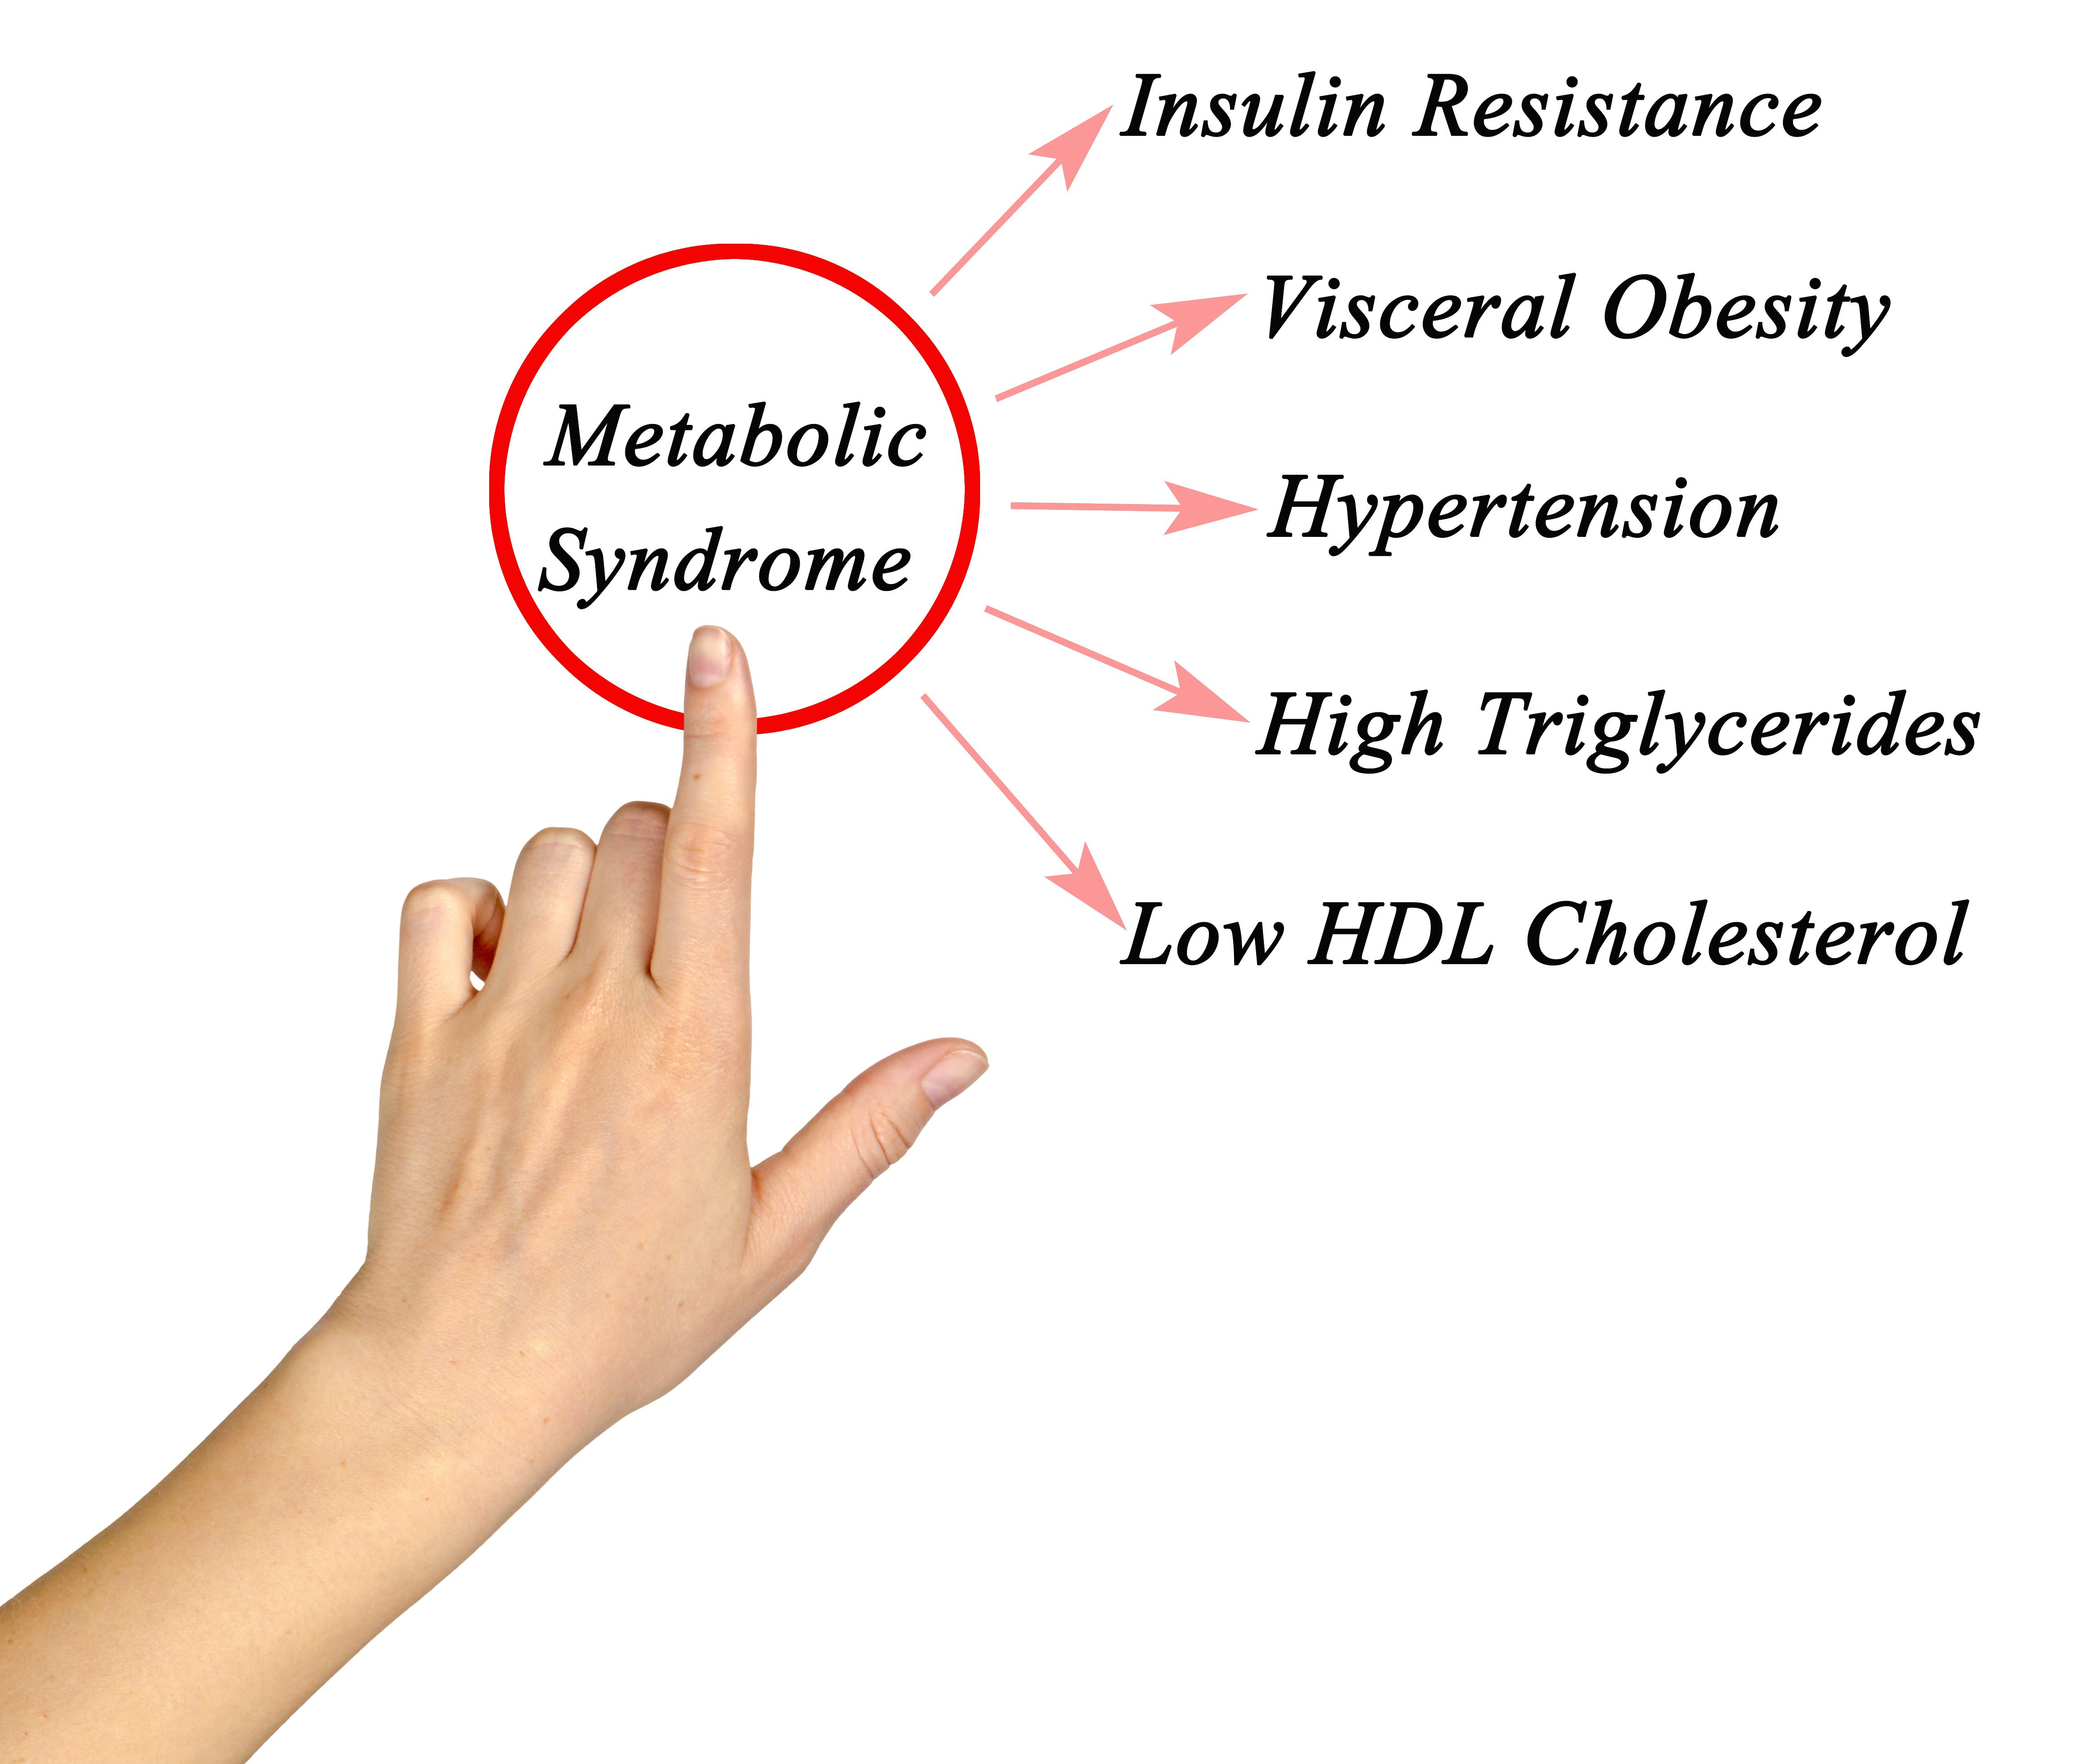 Symptoms of Metabolic Syndrome